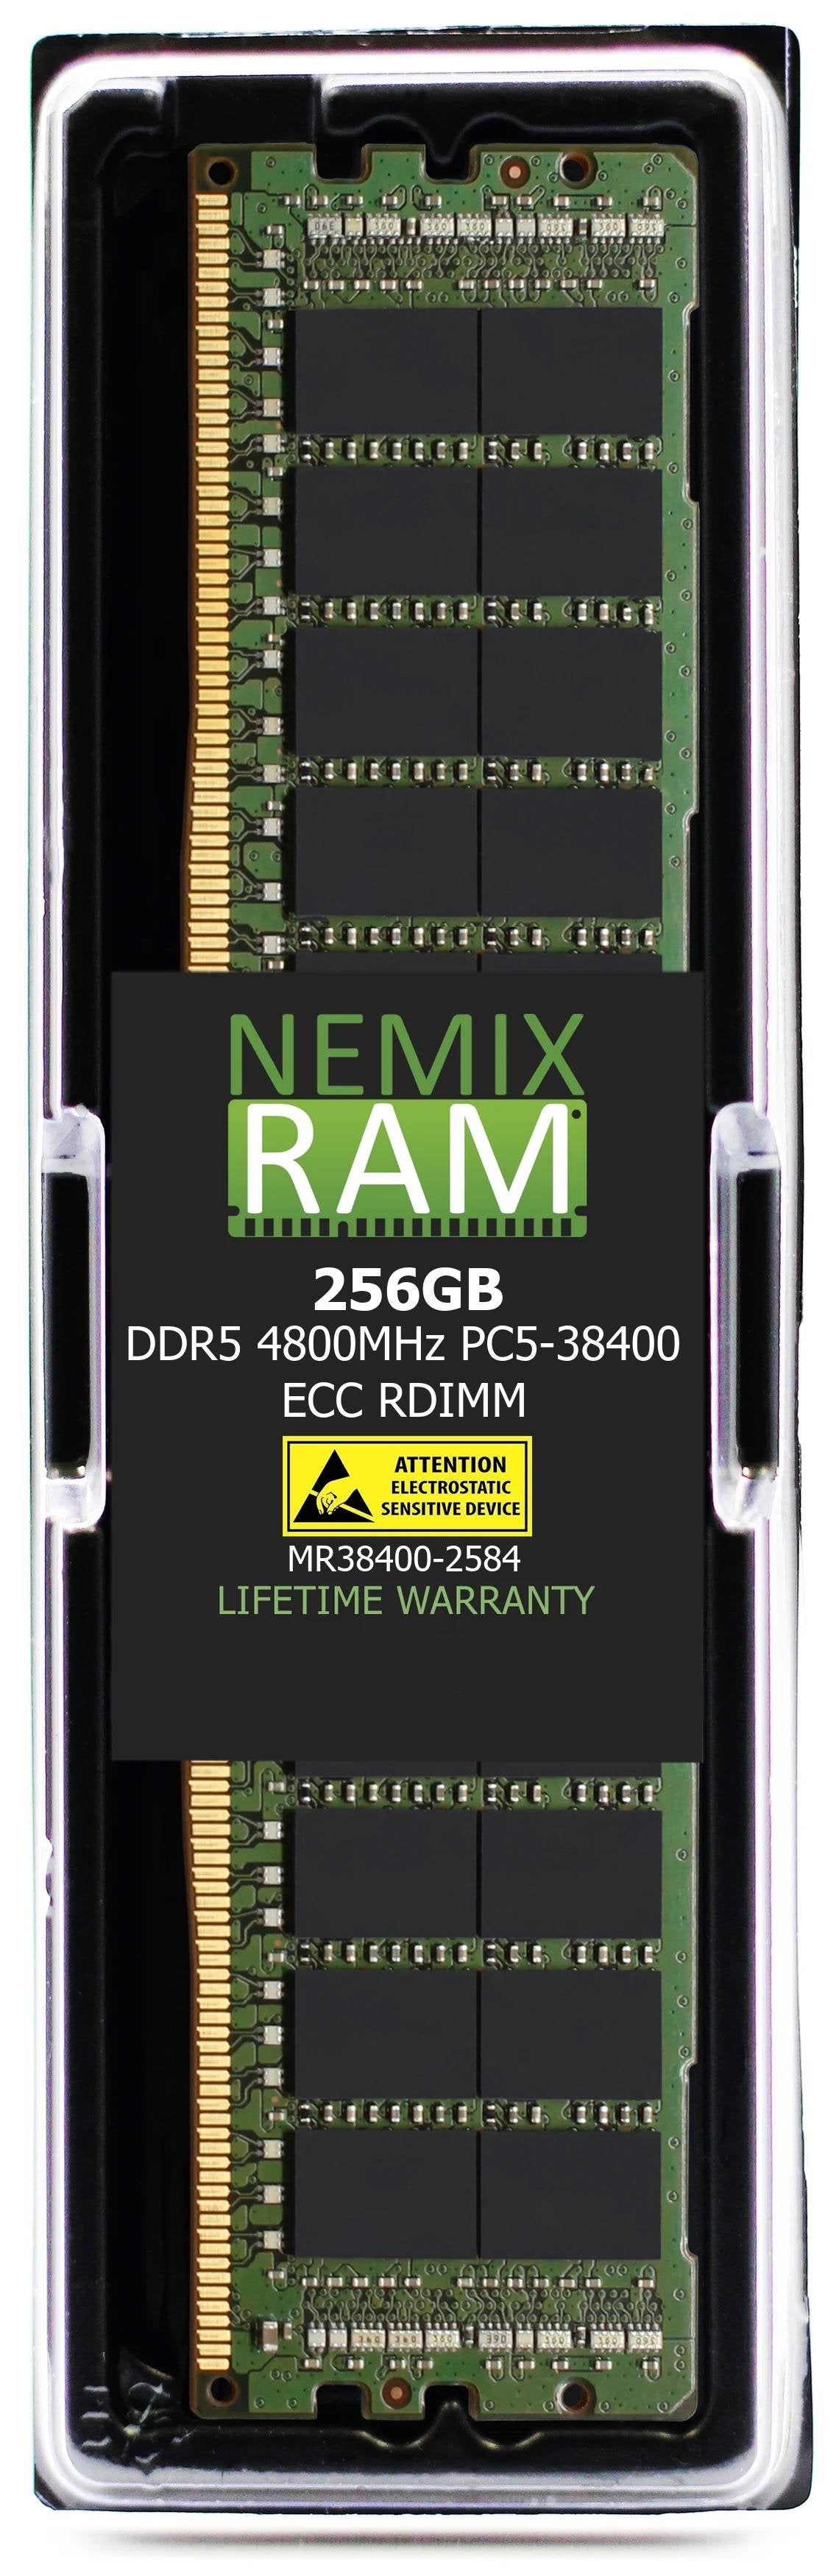 NEMIX RAM 256GB DDR5 4800MHz PC5-38400 ECC RDIMM Compatible with Hynix HMCT14MEERA146N